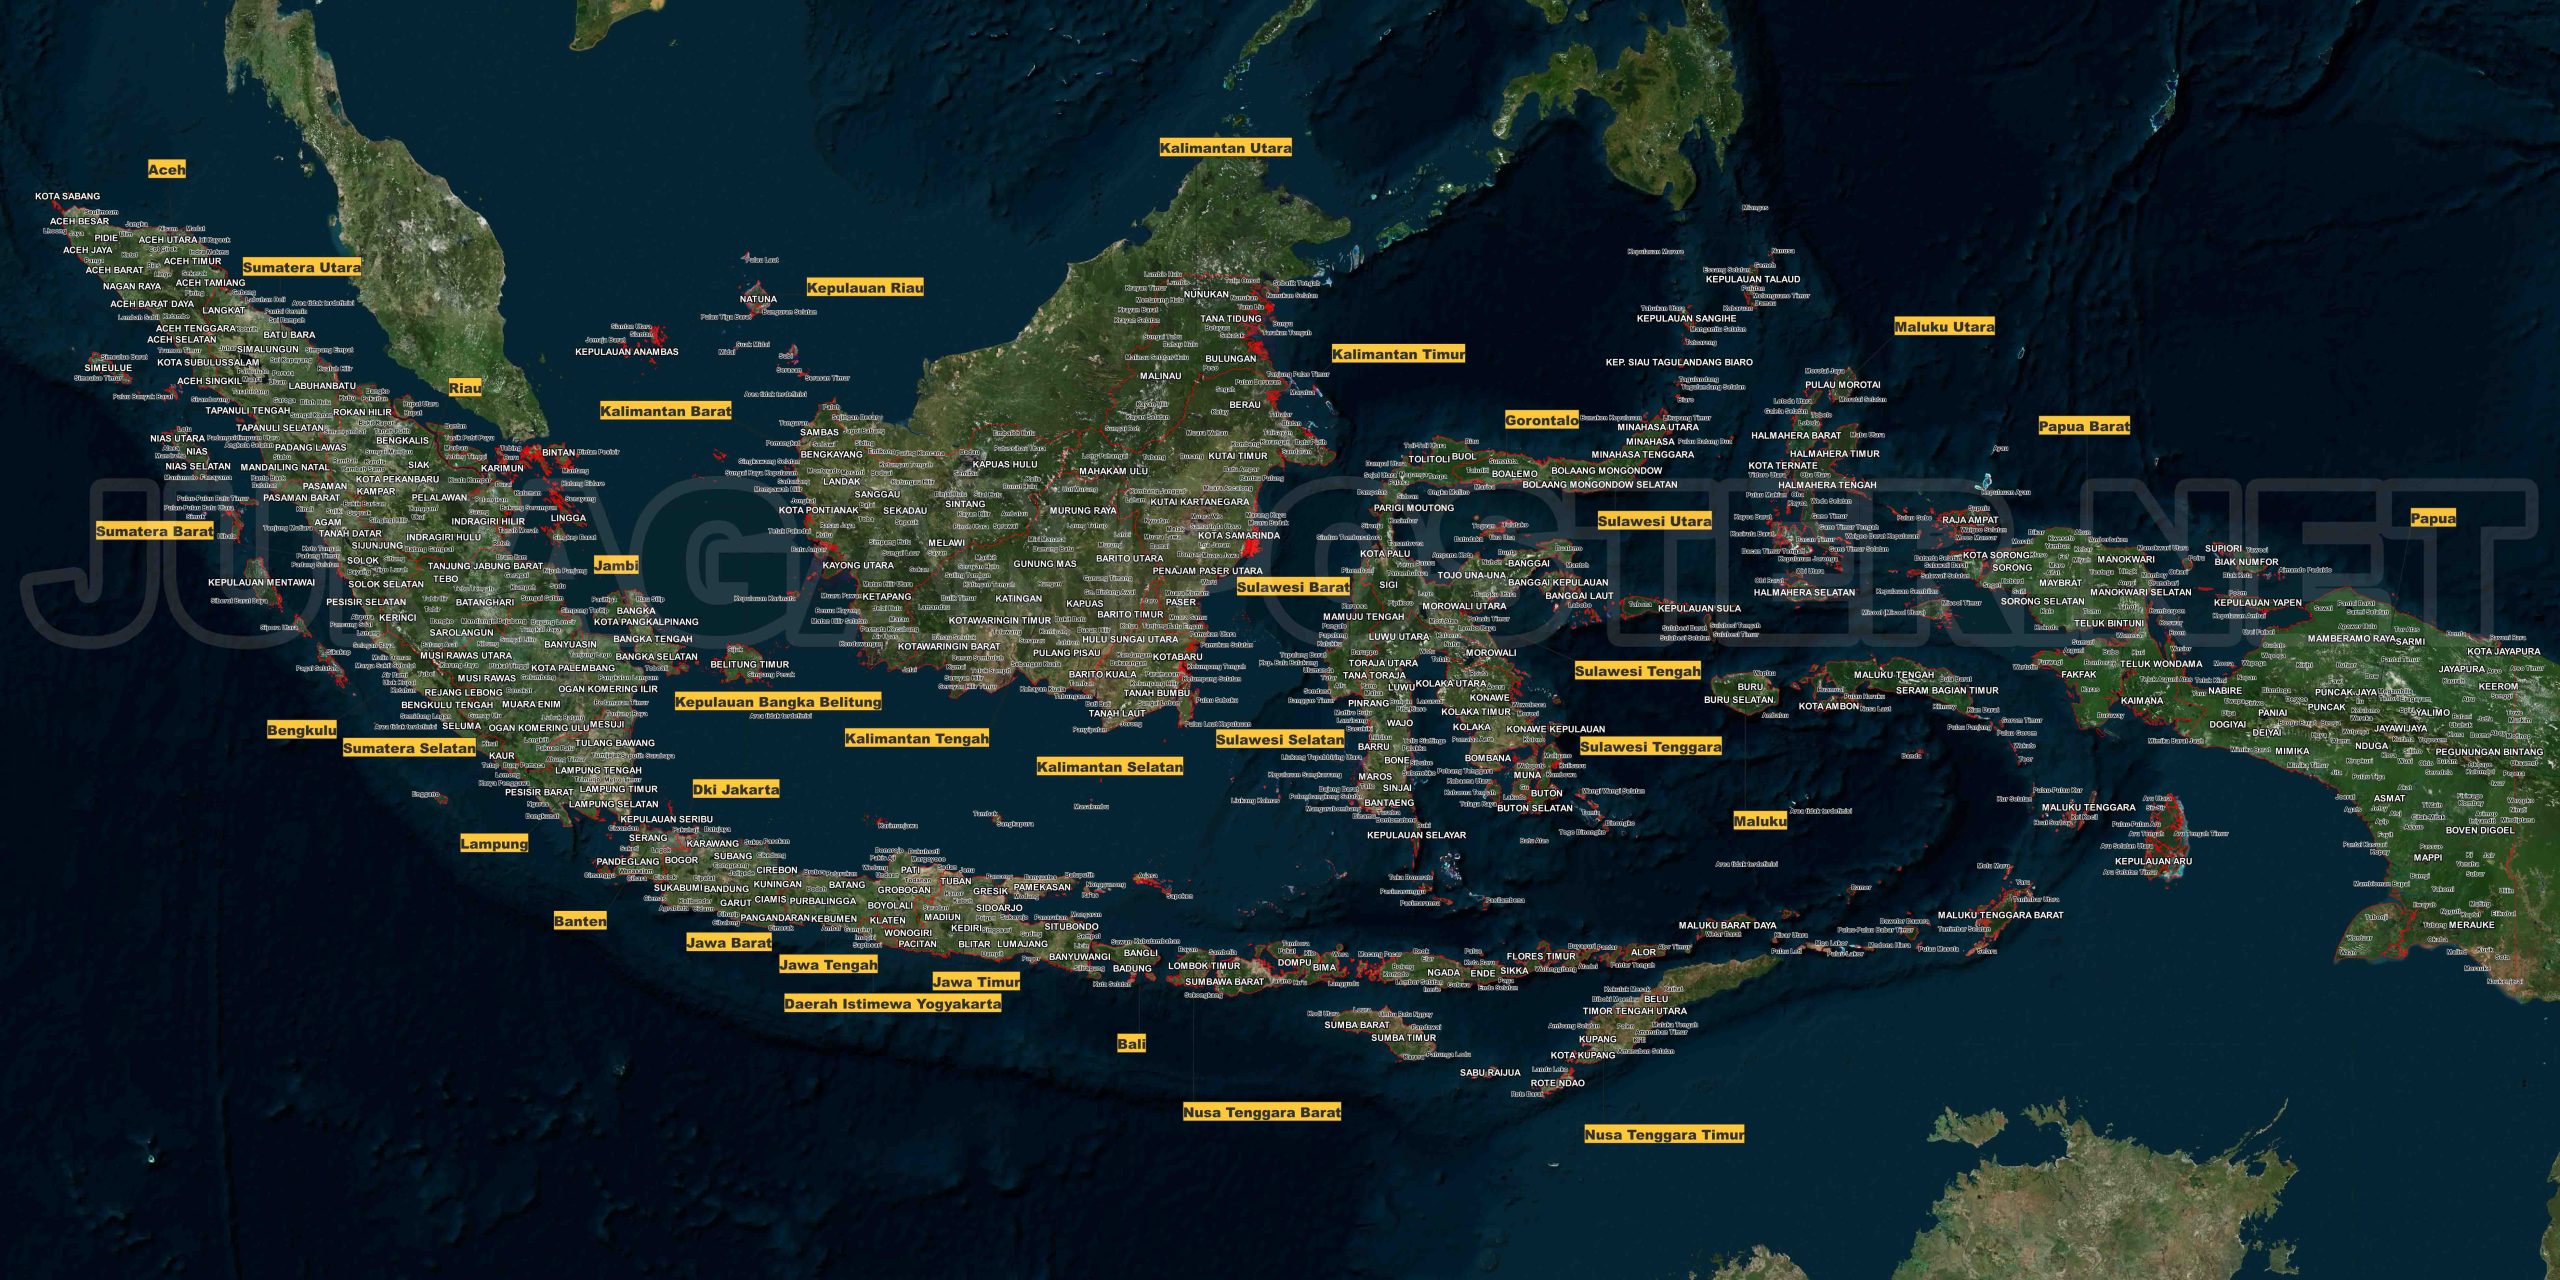 Mengungkap Jejak Sejarah: Contoh Peta Konsep Sejarah Indonesia